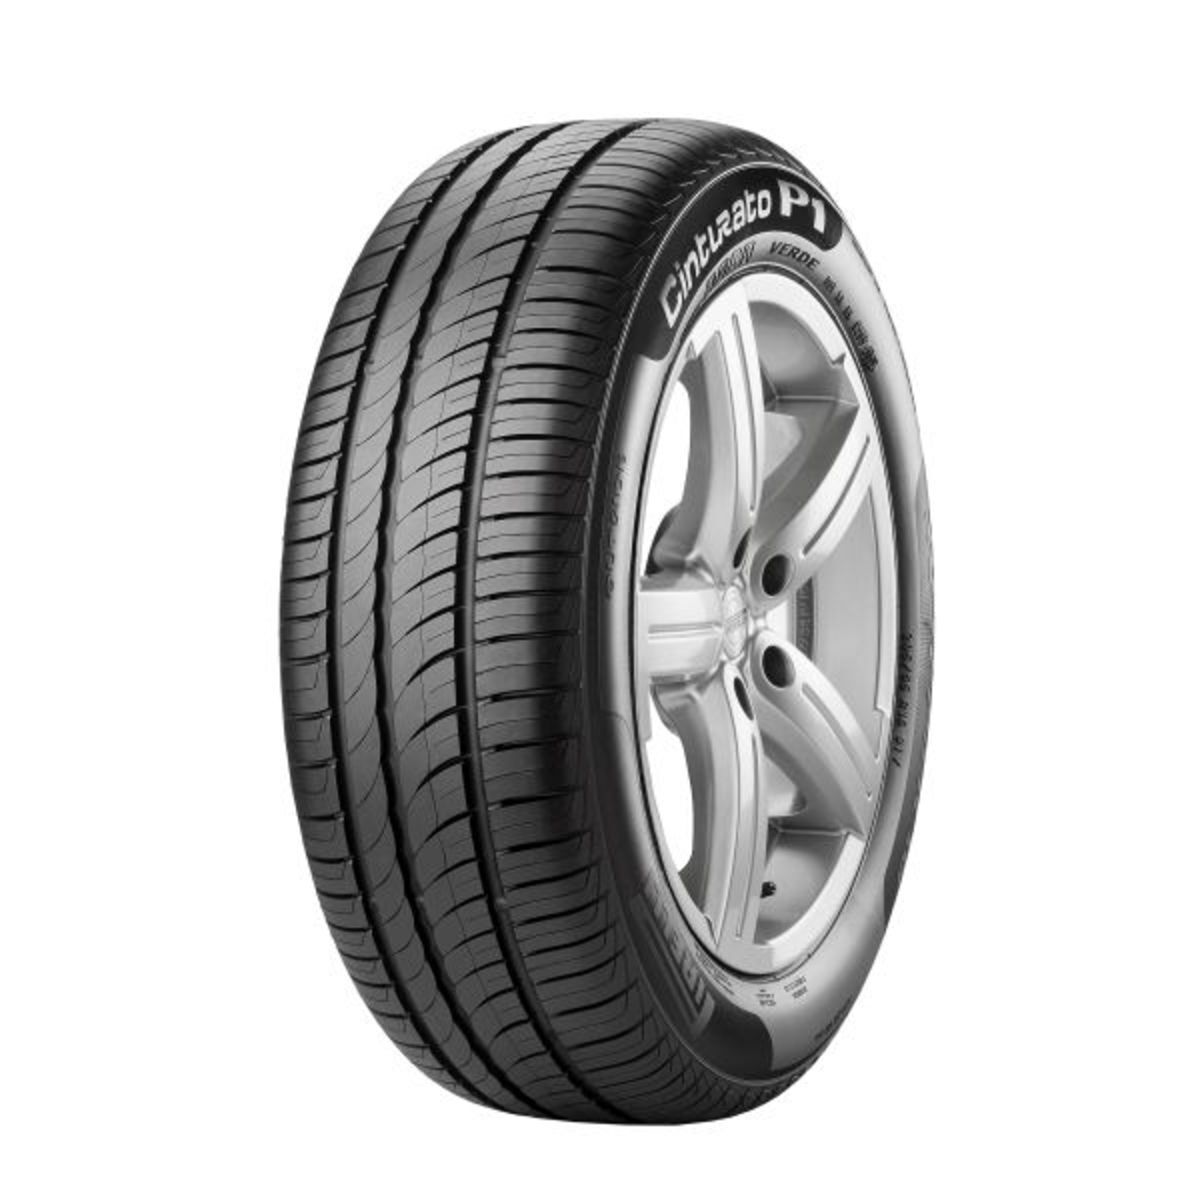 Neumáticos de verano PIRELLI Cinturato P1 Verde 185/60R15 XL 88H